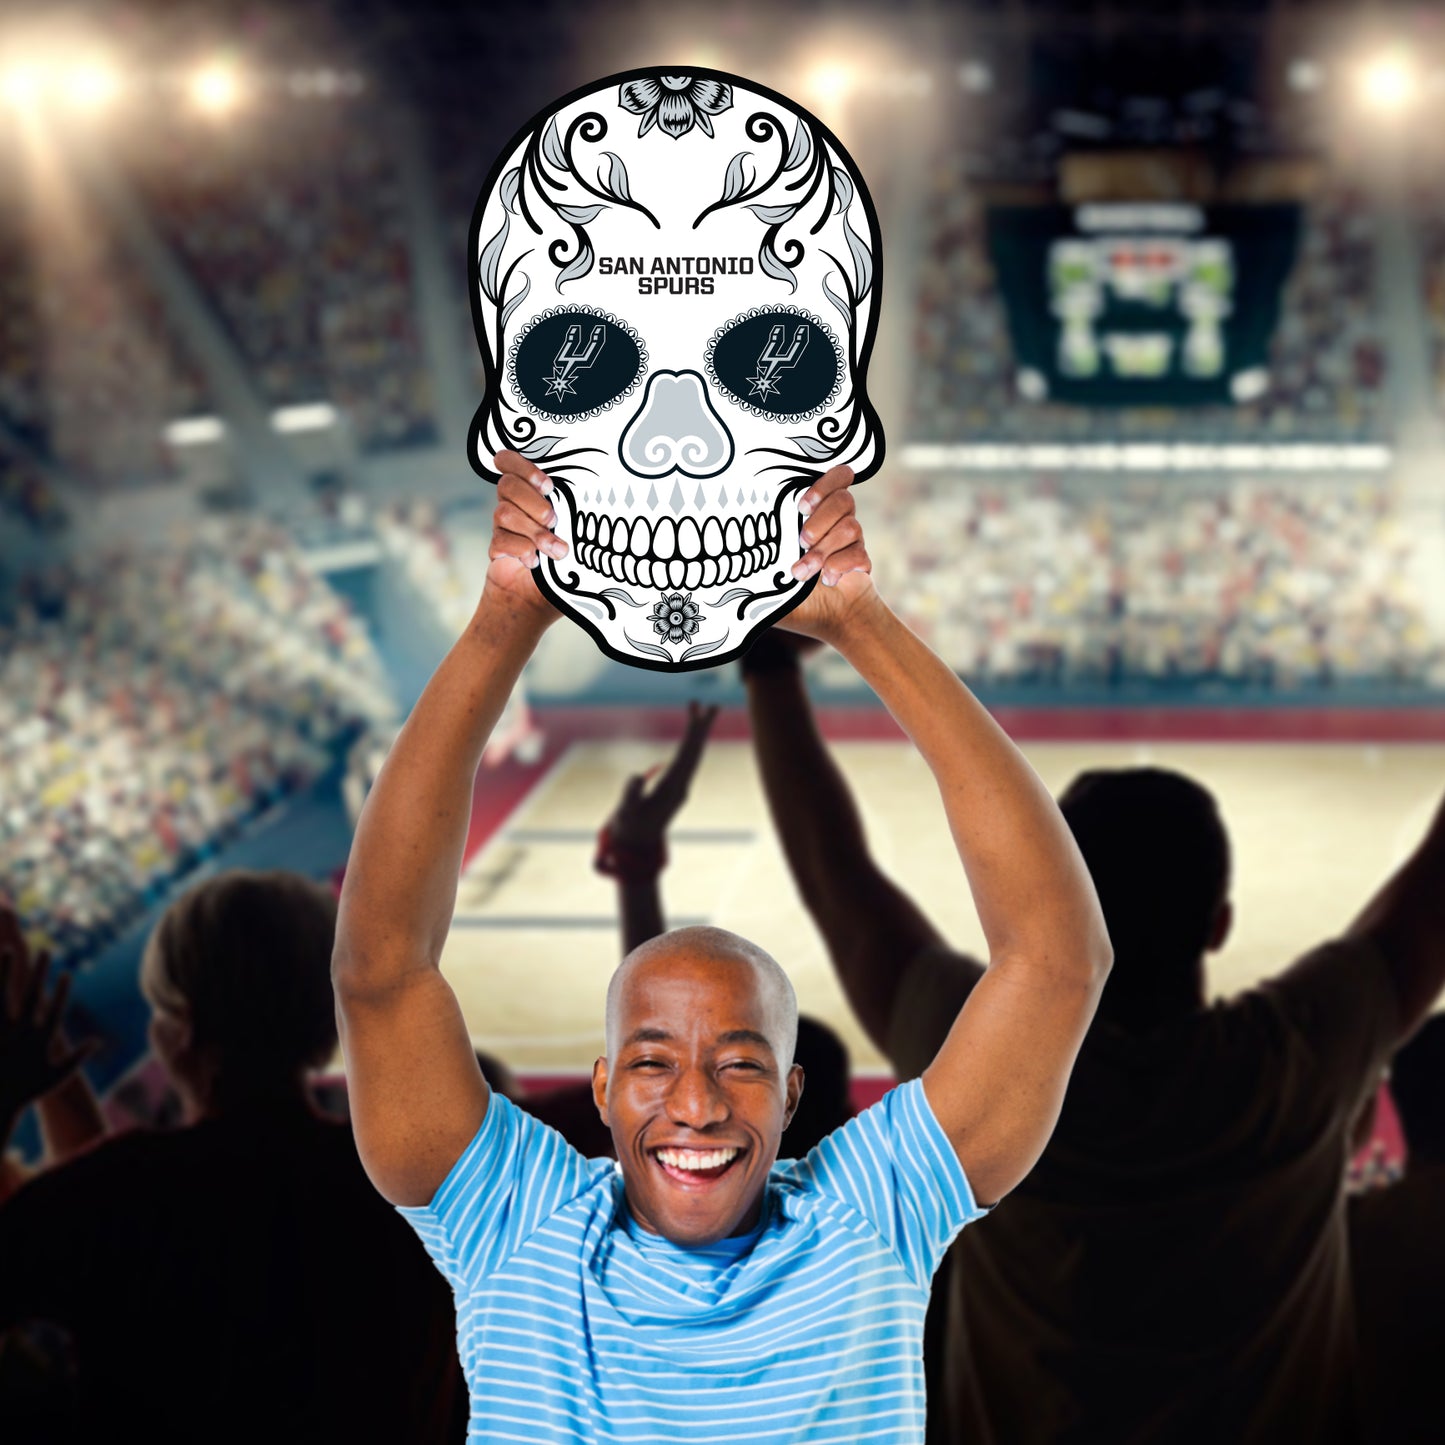 San Antonio Spurs: Skull Foam Core Cutout - Officially Licensed NBA Big Head